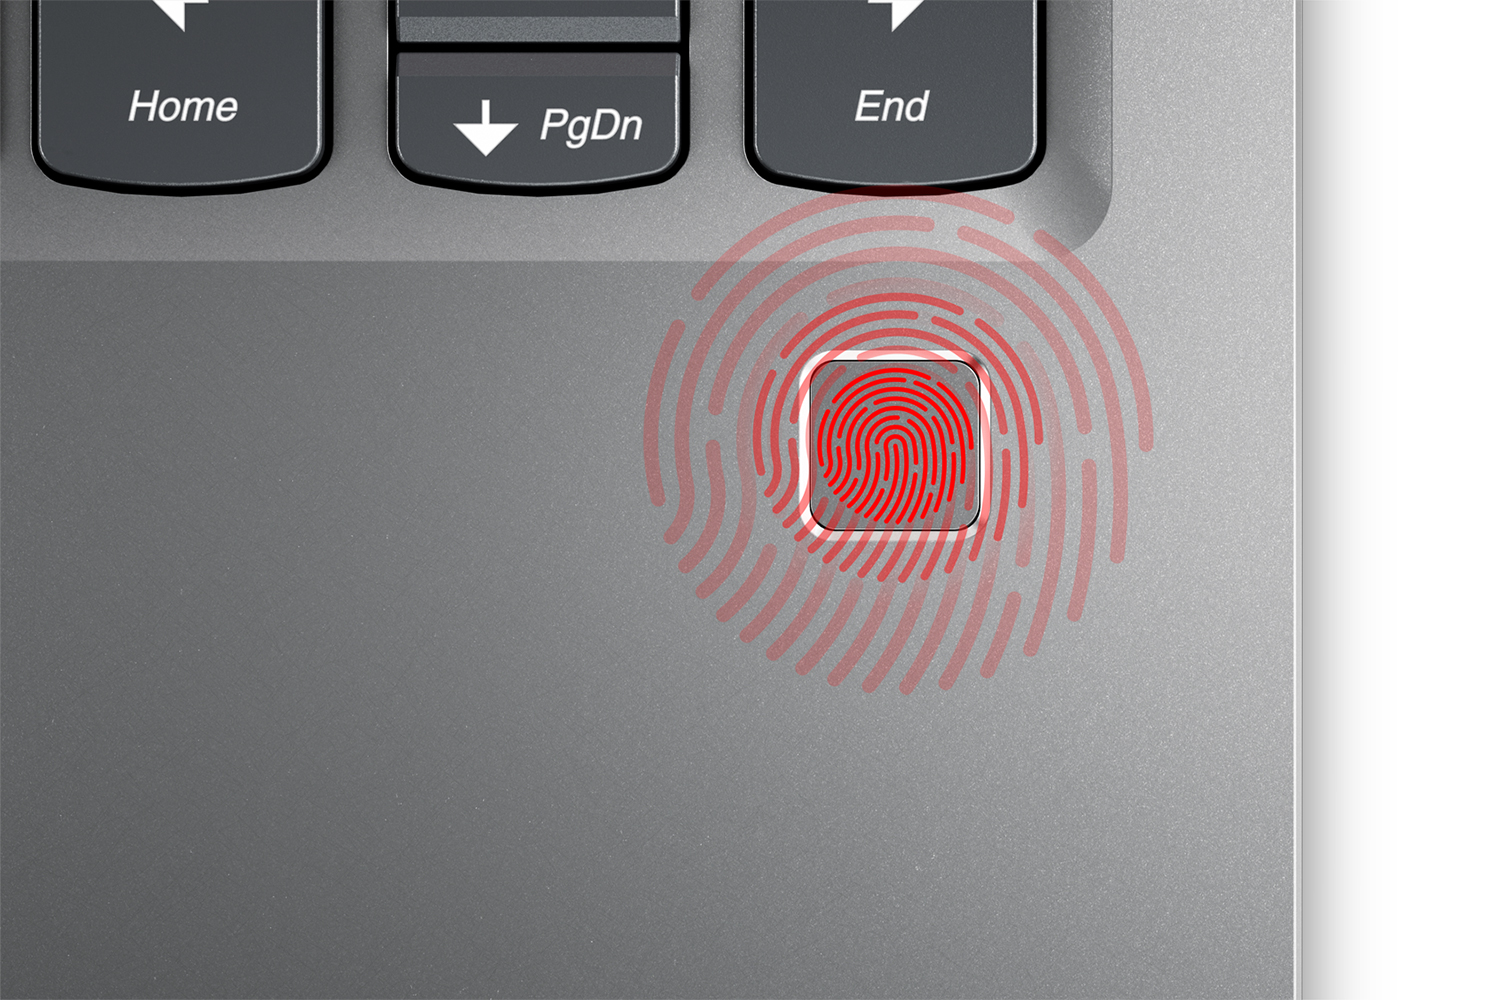 lenovo mwc refresh yoga miix flex tab4 secure fingerprint reader for easy log in on 13 inch 720